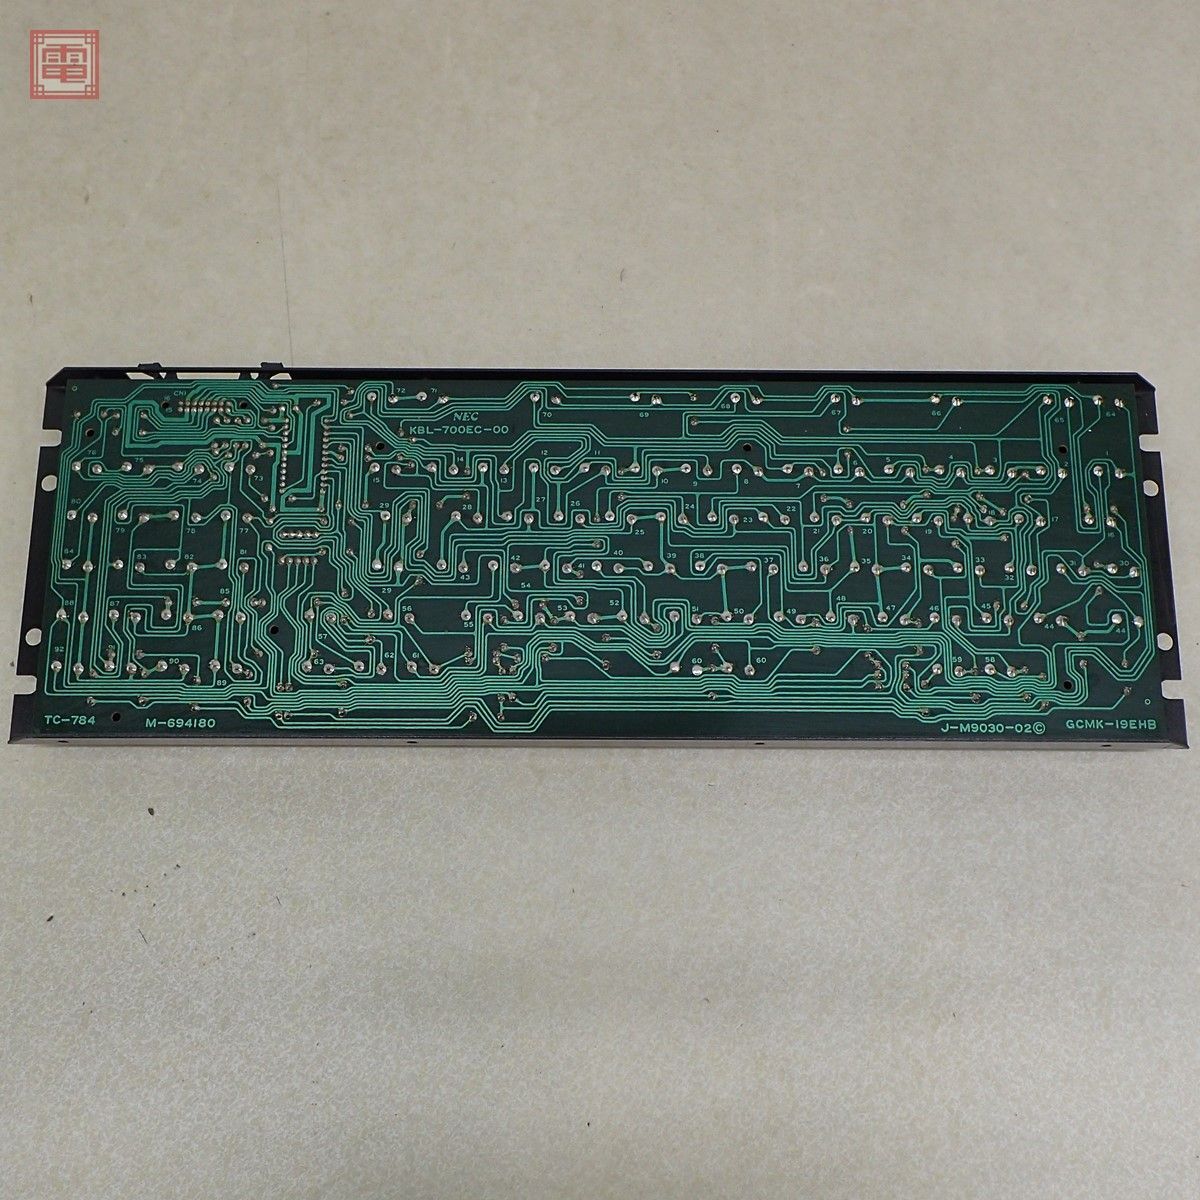 NEC PC-8801 キーボードユニット 箱付 日本電気 希少 レア M-694180/J-M9030-02/GCMK-19EHB 動作未確認【40の画像3